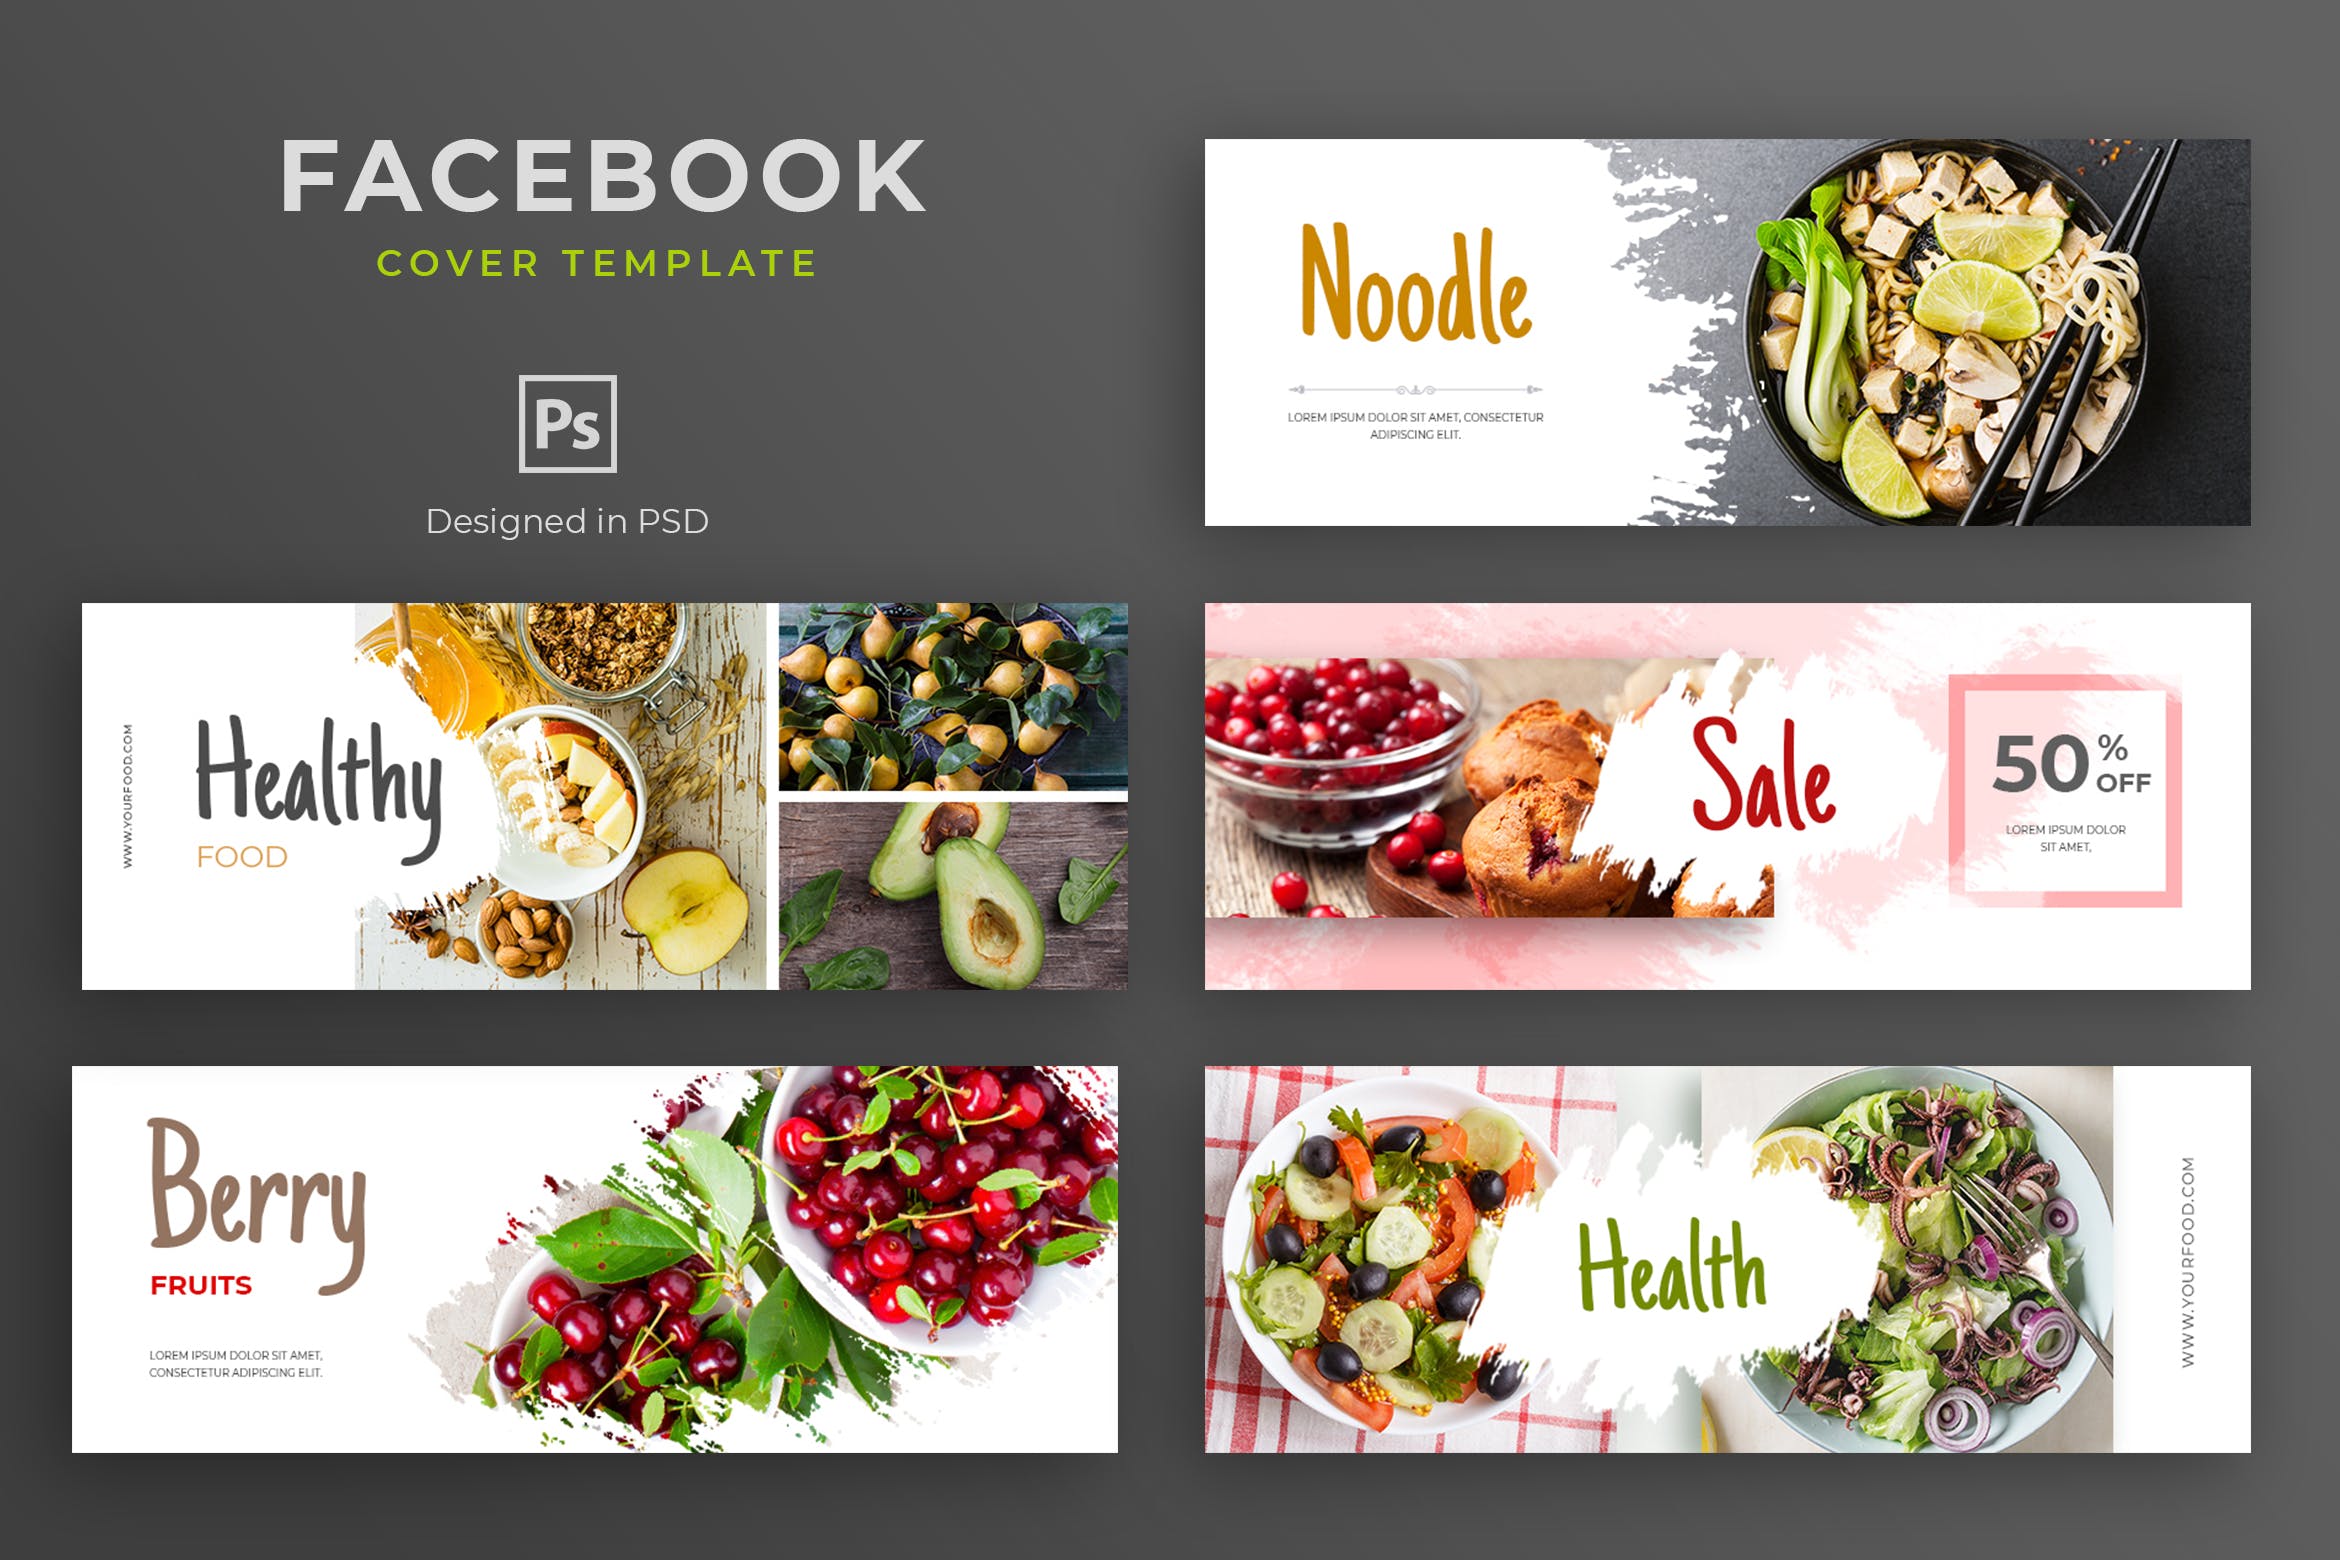 健康食物品牌推广Facebook主页封面设计模板素材库精选 Healthy Food Facebook Cover Template插图